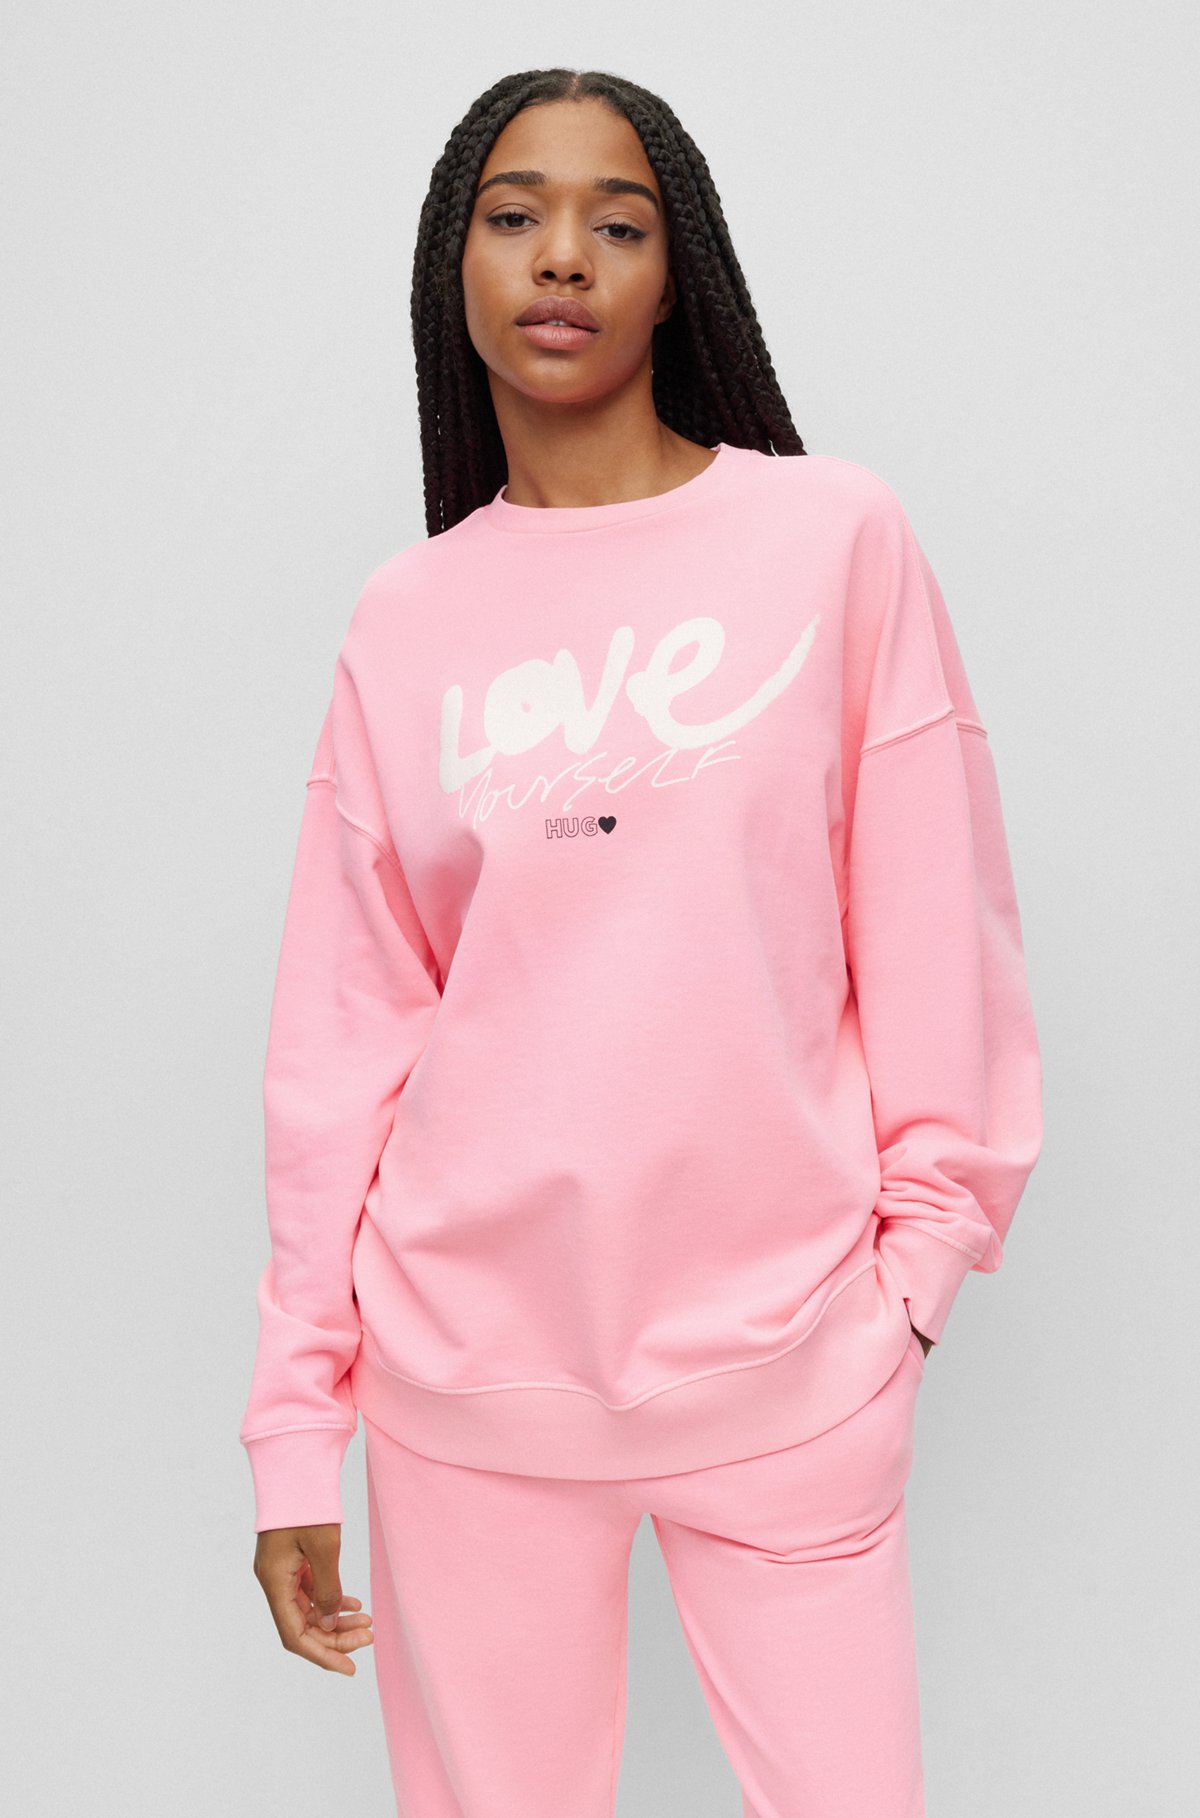 Oversized-fit cotton sweatshirt with seasonal artwork, Pink